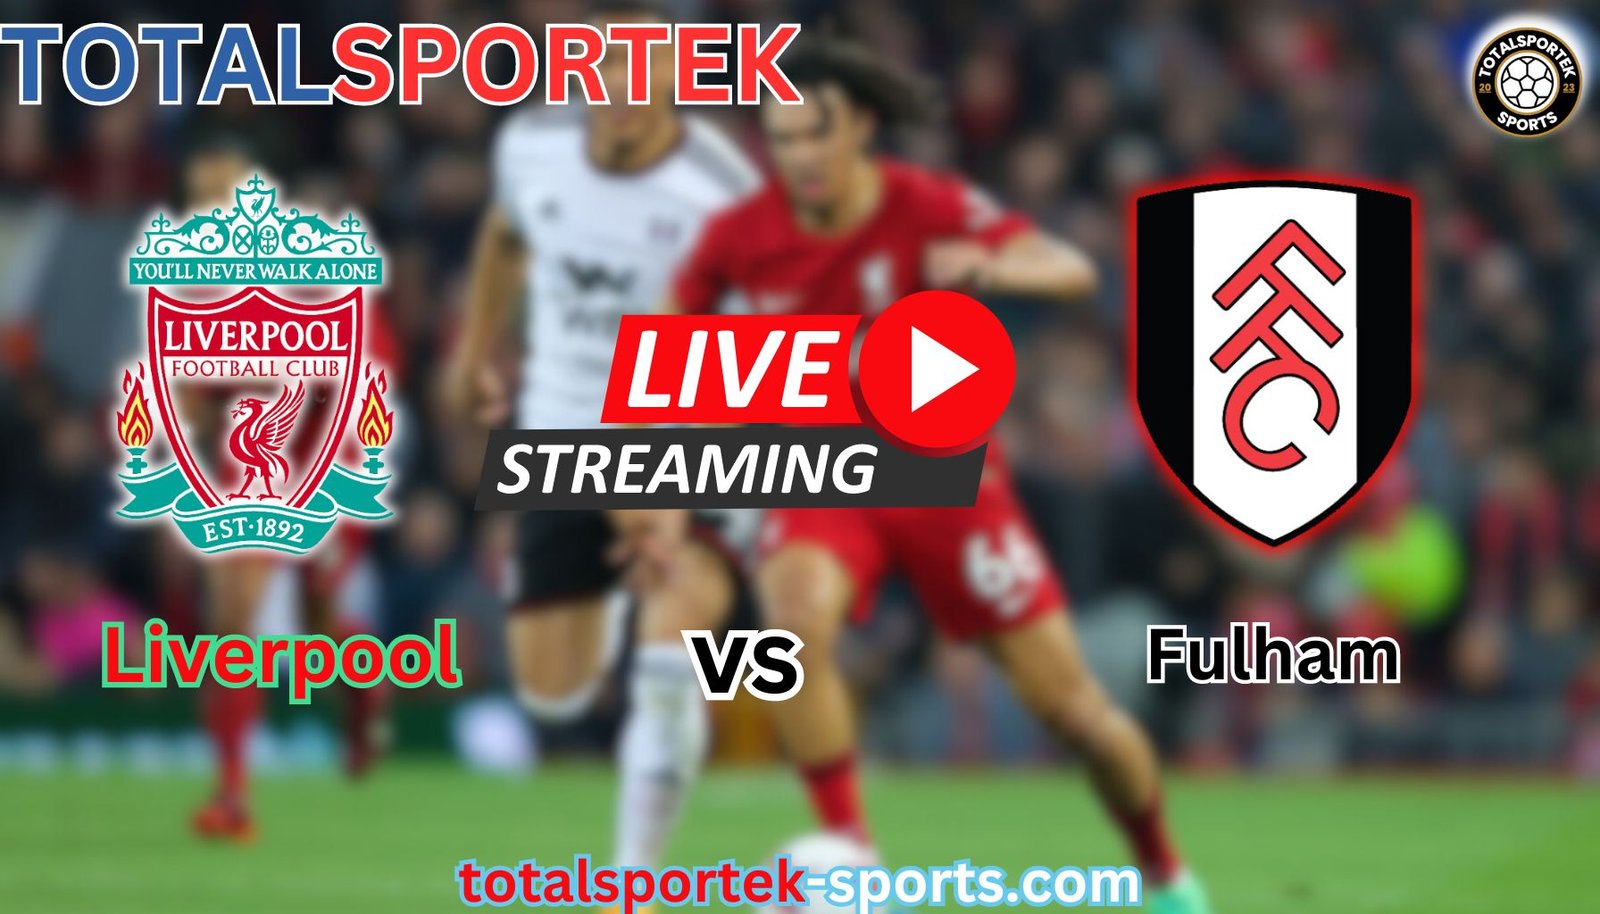 Totalsportek Liverpool Vs Fulham Live Stream Totalsportek Live